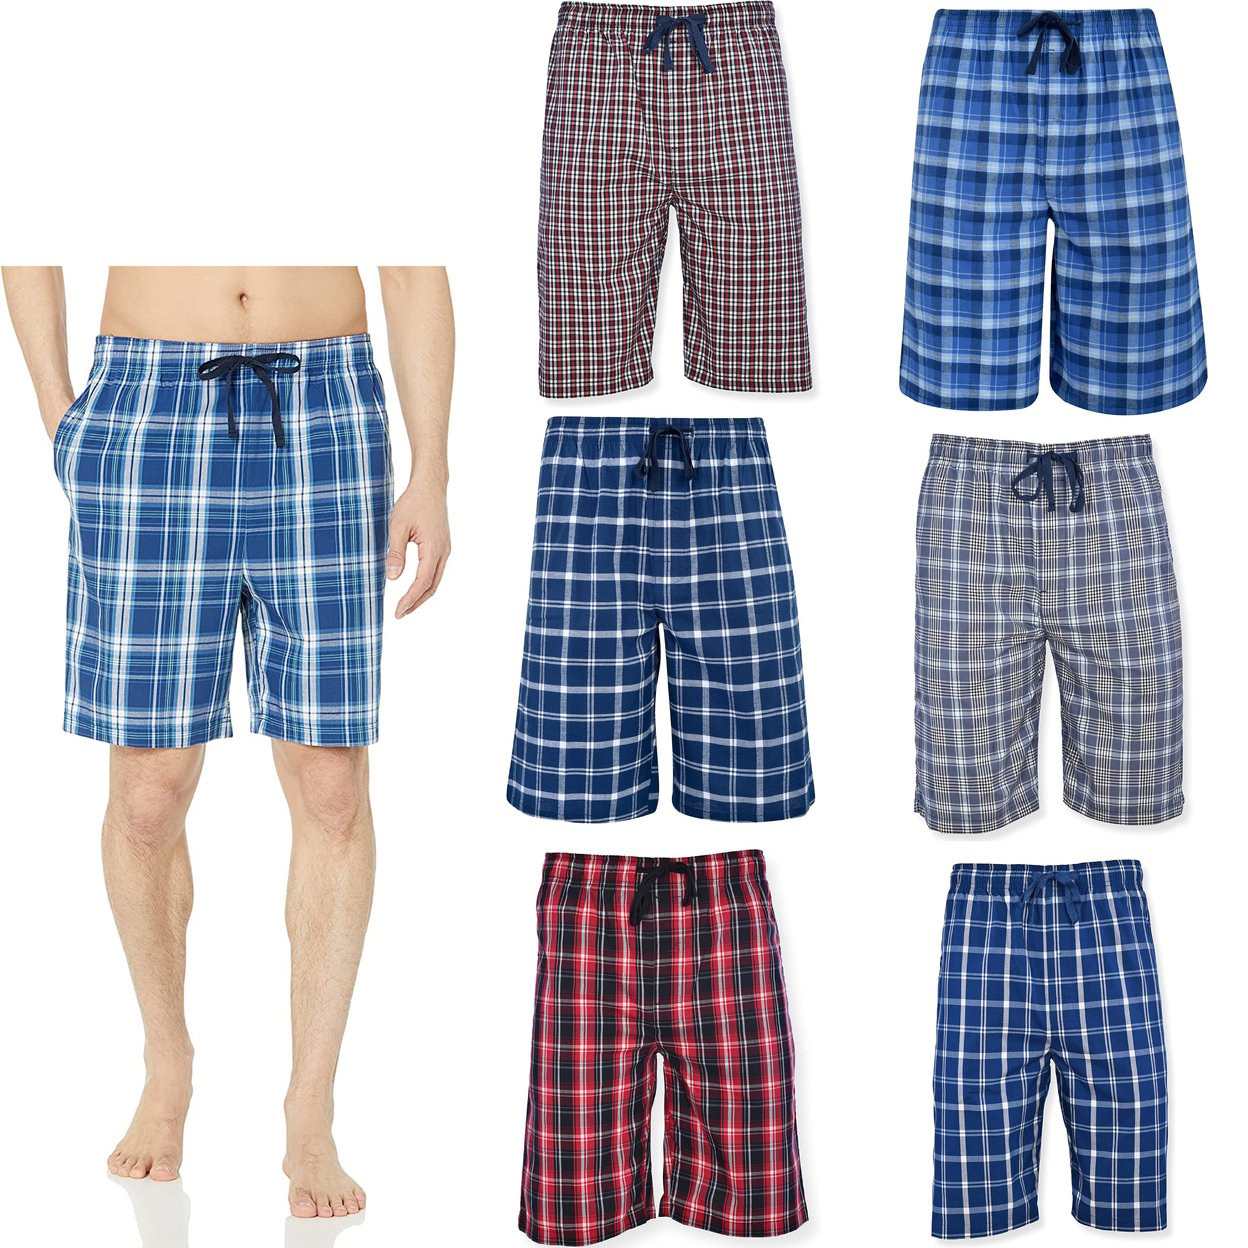 2-Pack: Men's Ultra Soft Plaid Lounge Pajama Sleep Wear Shorts - Red& Red, Medium